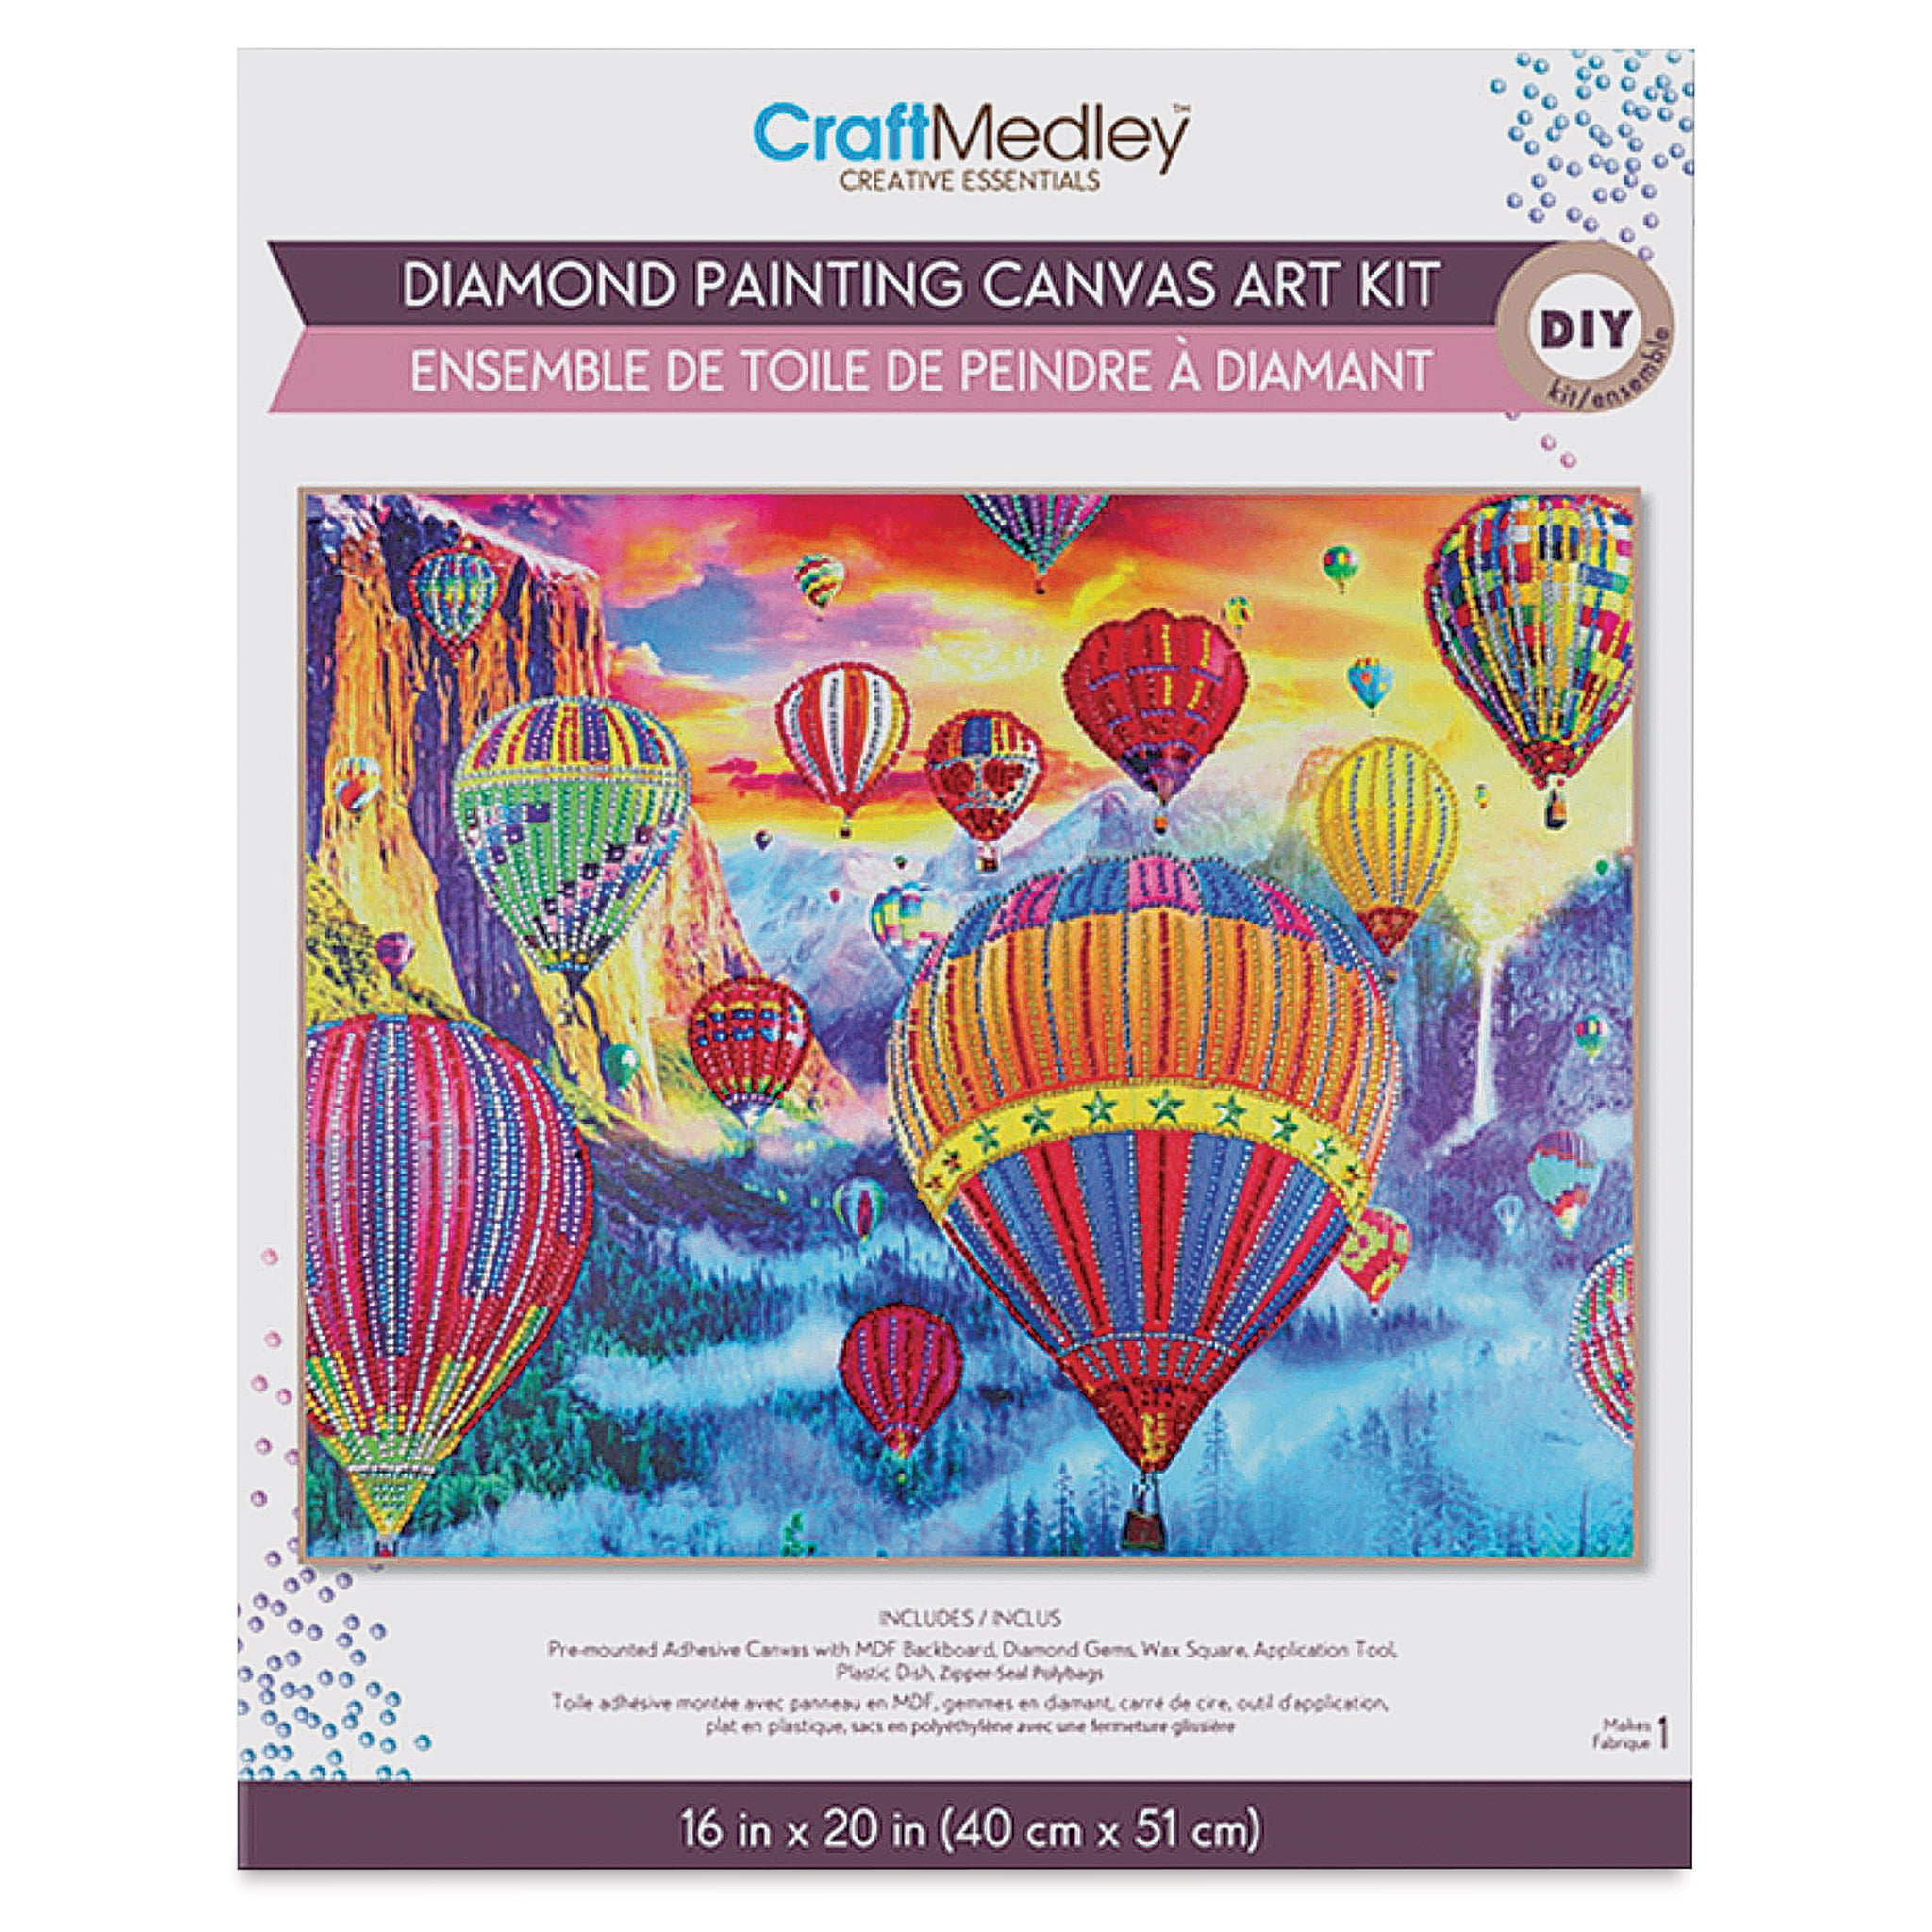 Craft Medley - Diamond painting canvas art kit, 12x16 - Dream